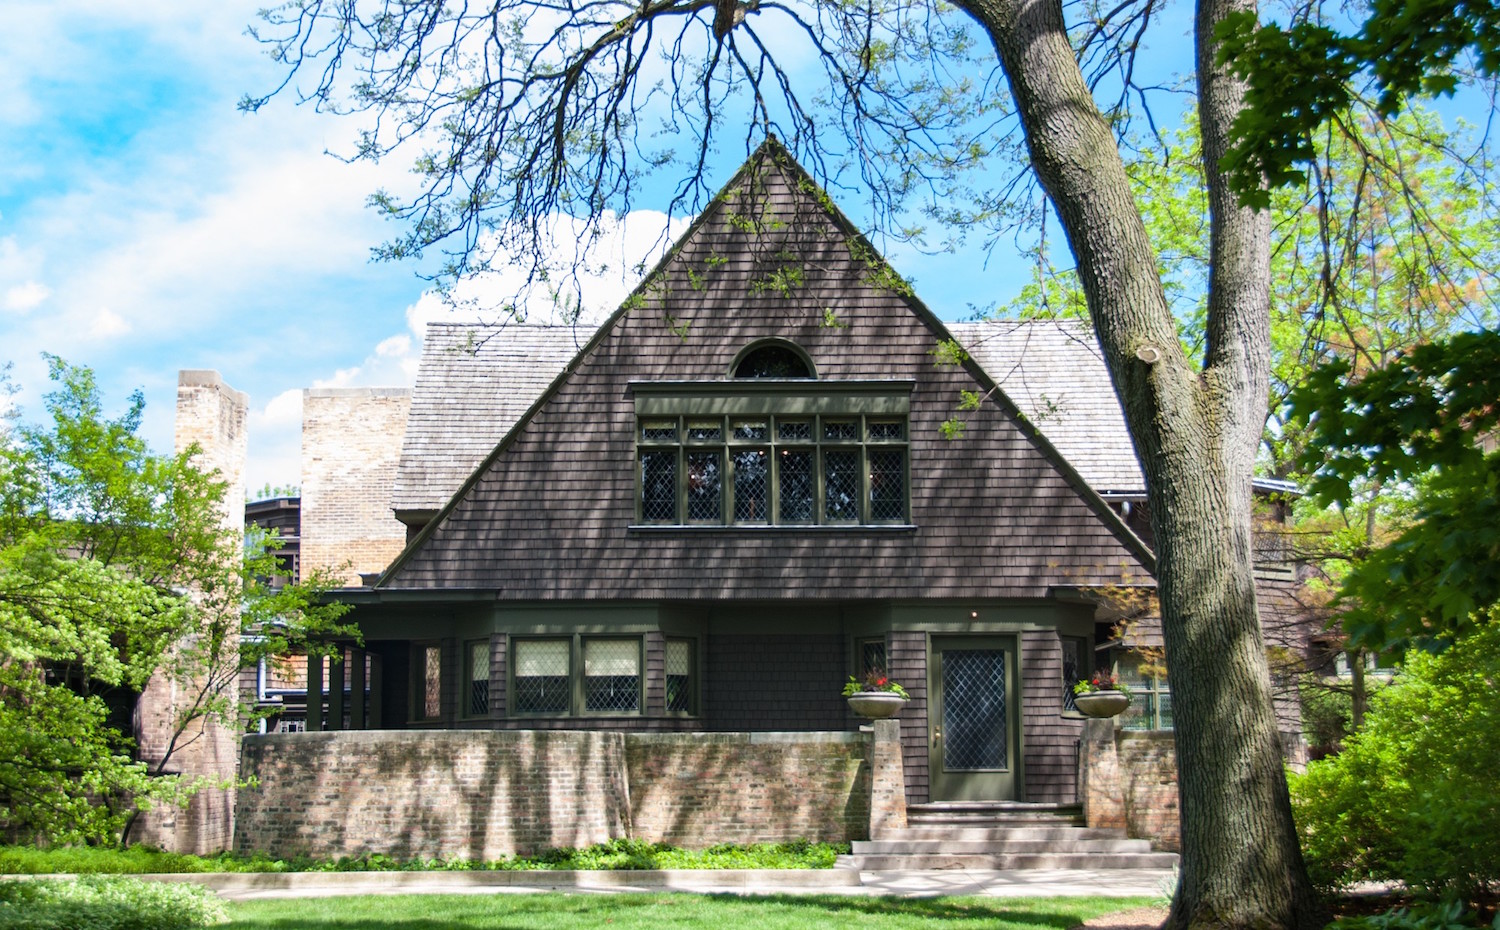 La casa-estudio del arquitecto en Oak Park, Illinois (1889-1898) de Frank Lloyd Wright